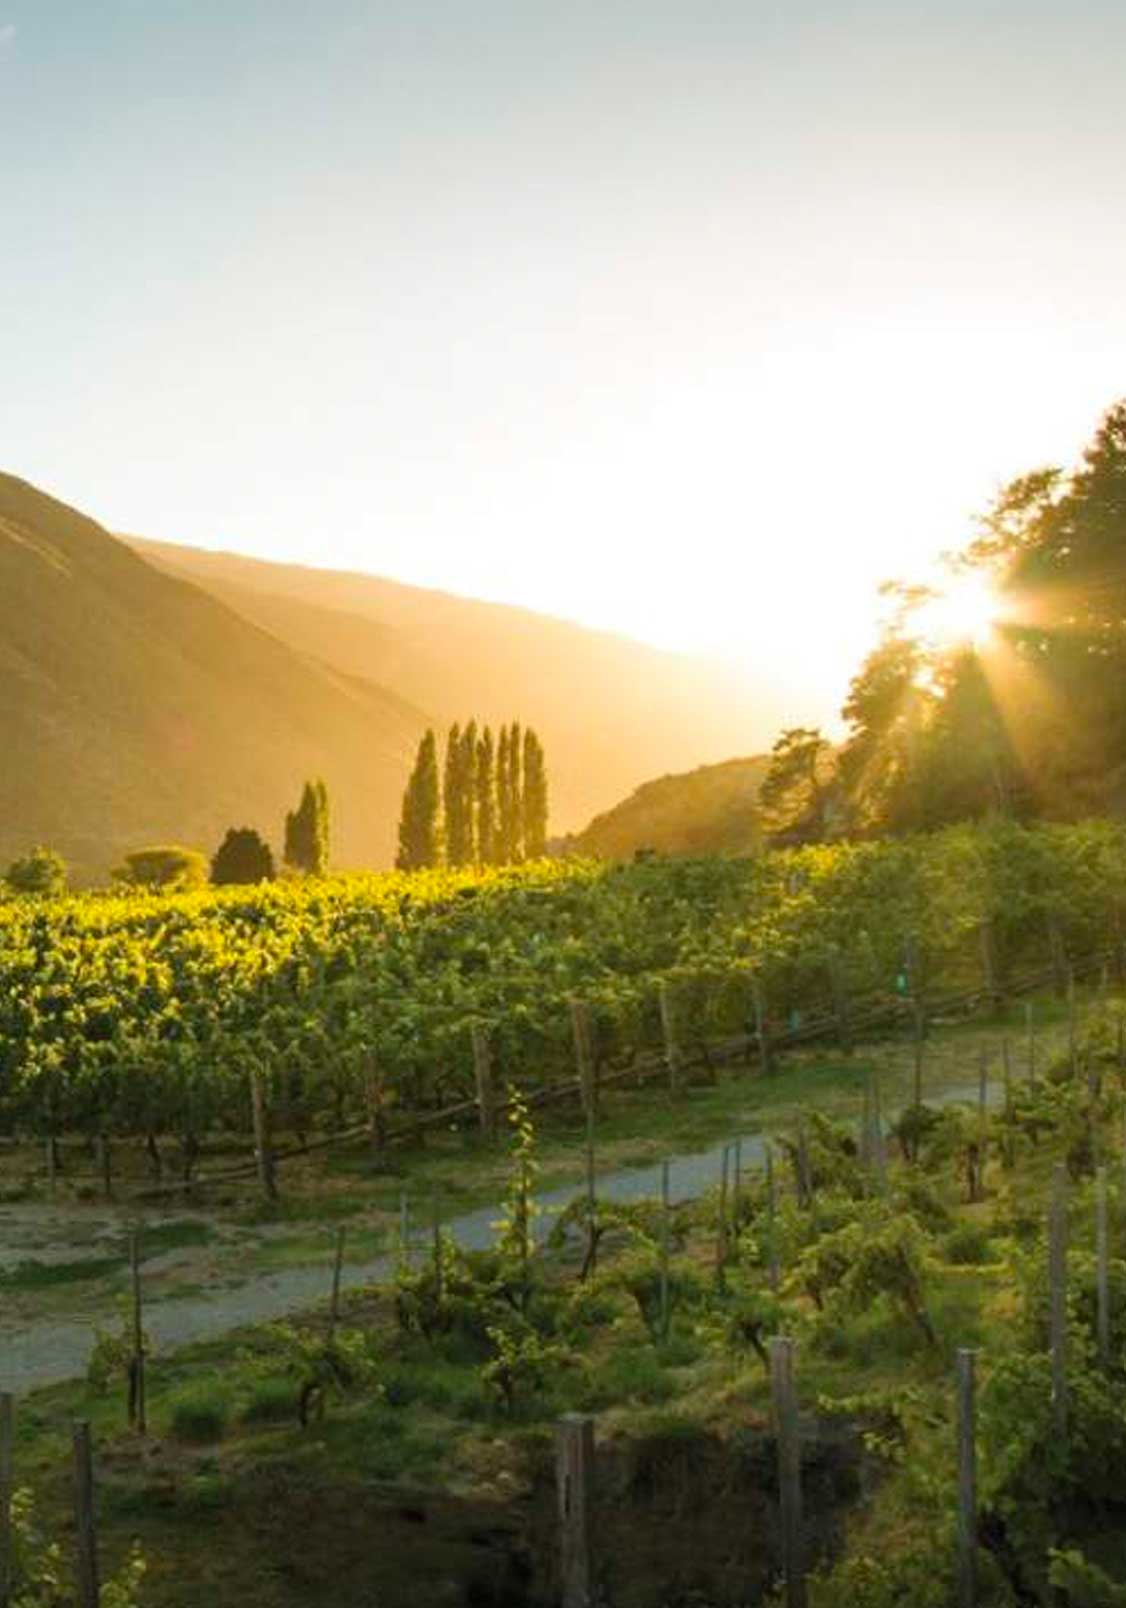 Sunset over a vineyard in New Zealand's wine region.